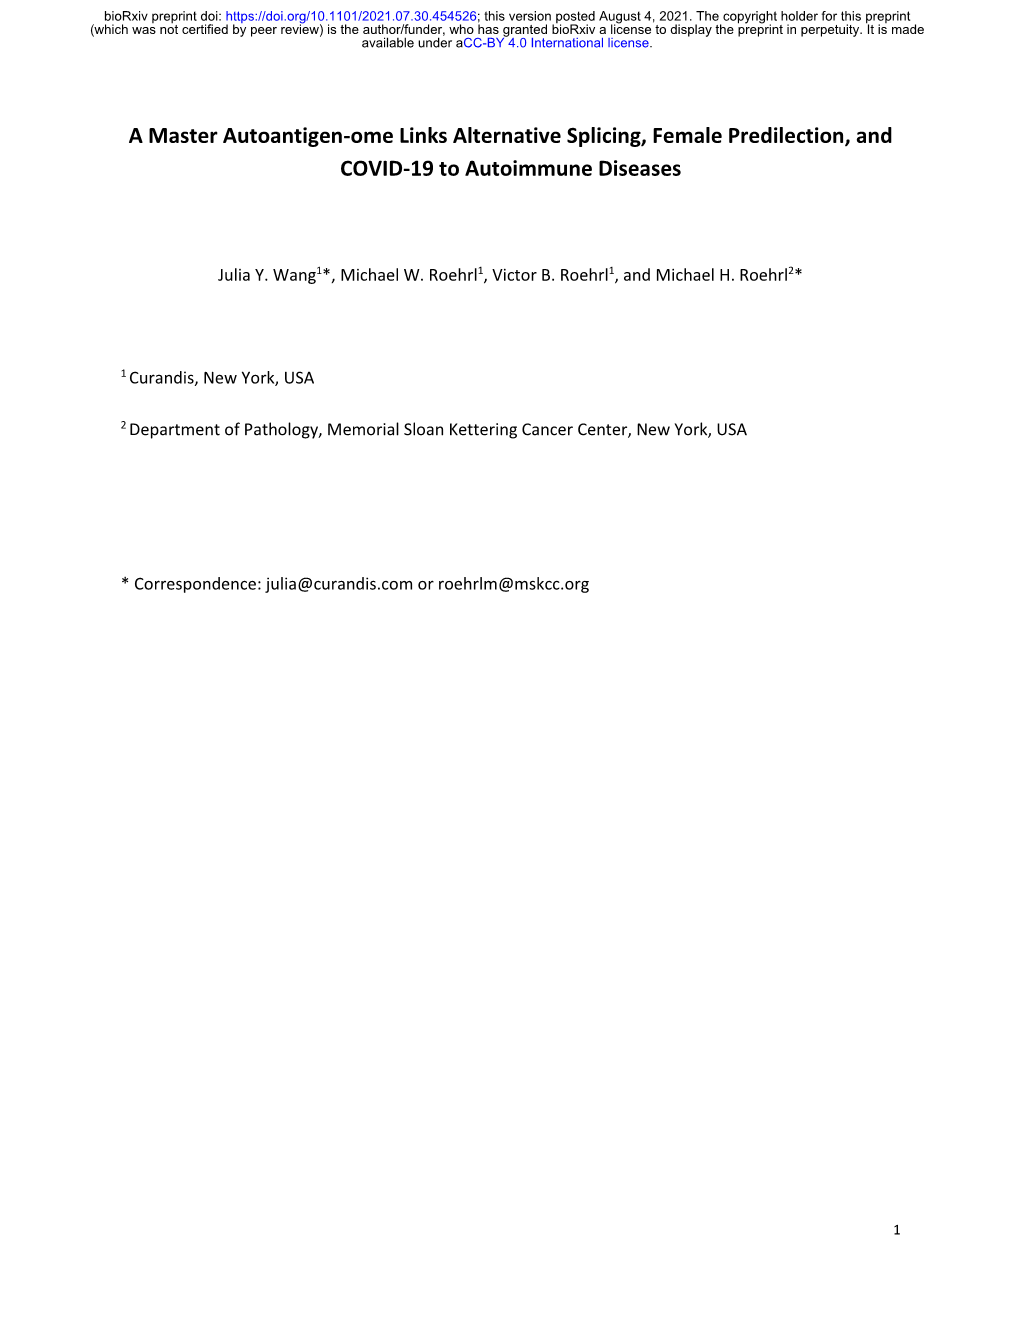 A Master Autoantigen-Ome Links Alternative Splicing, Female Predilection, and COVID-19 to Autoimmune Diseases